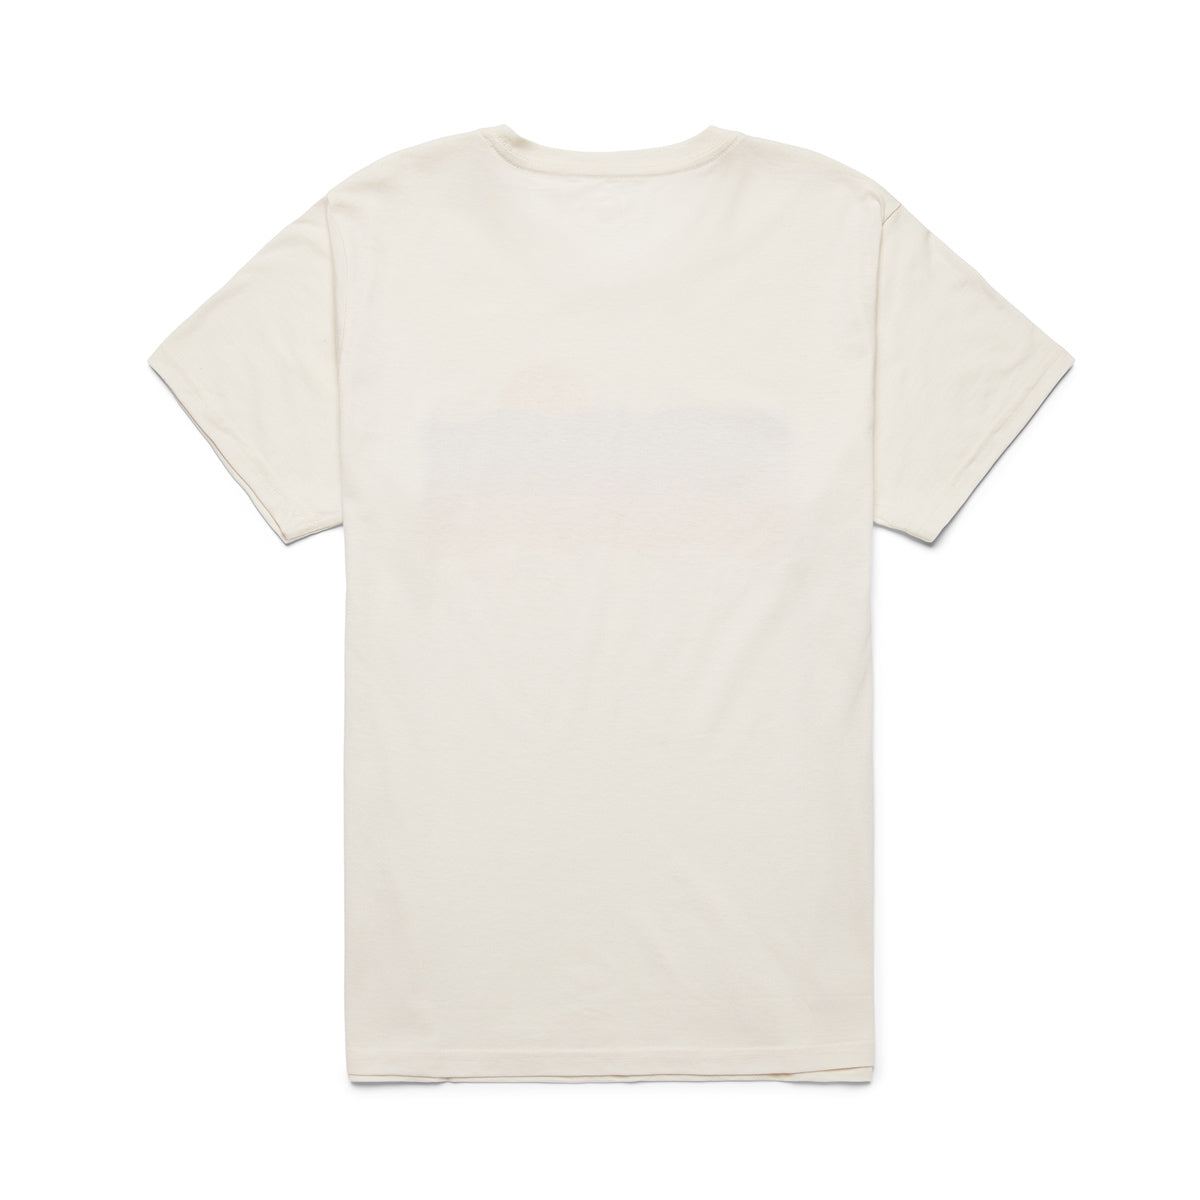 Cotopaxi Disco Wave T-Shirt - MENS コトパクシ ディスコ ウェーブ Tシャツ メンズ